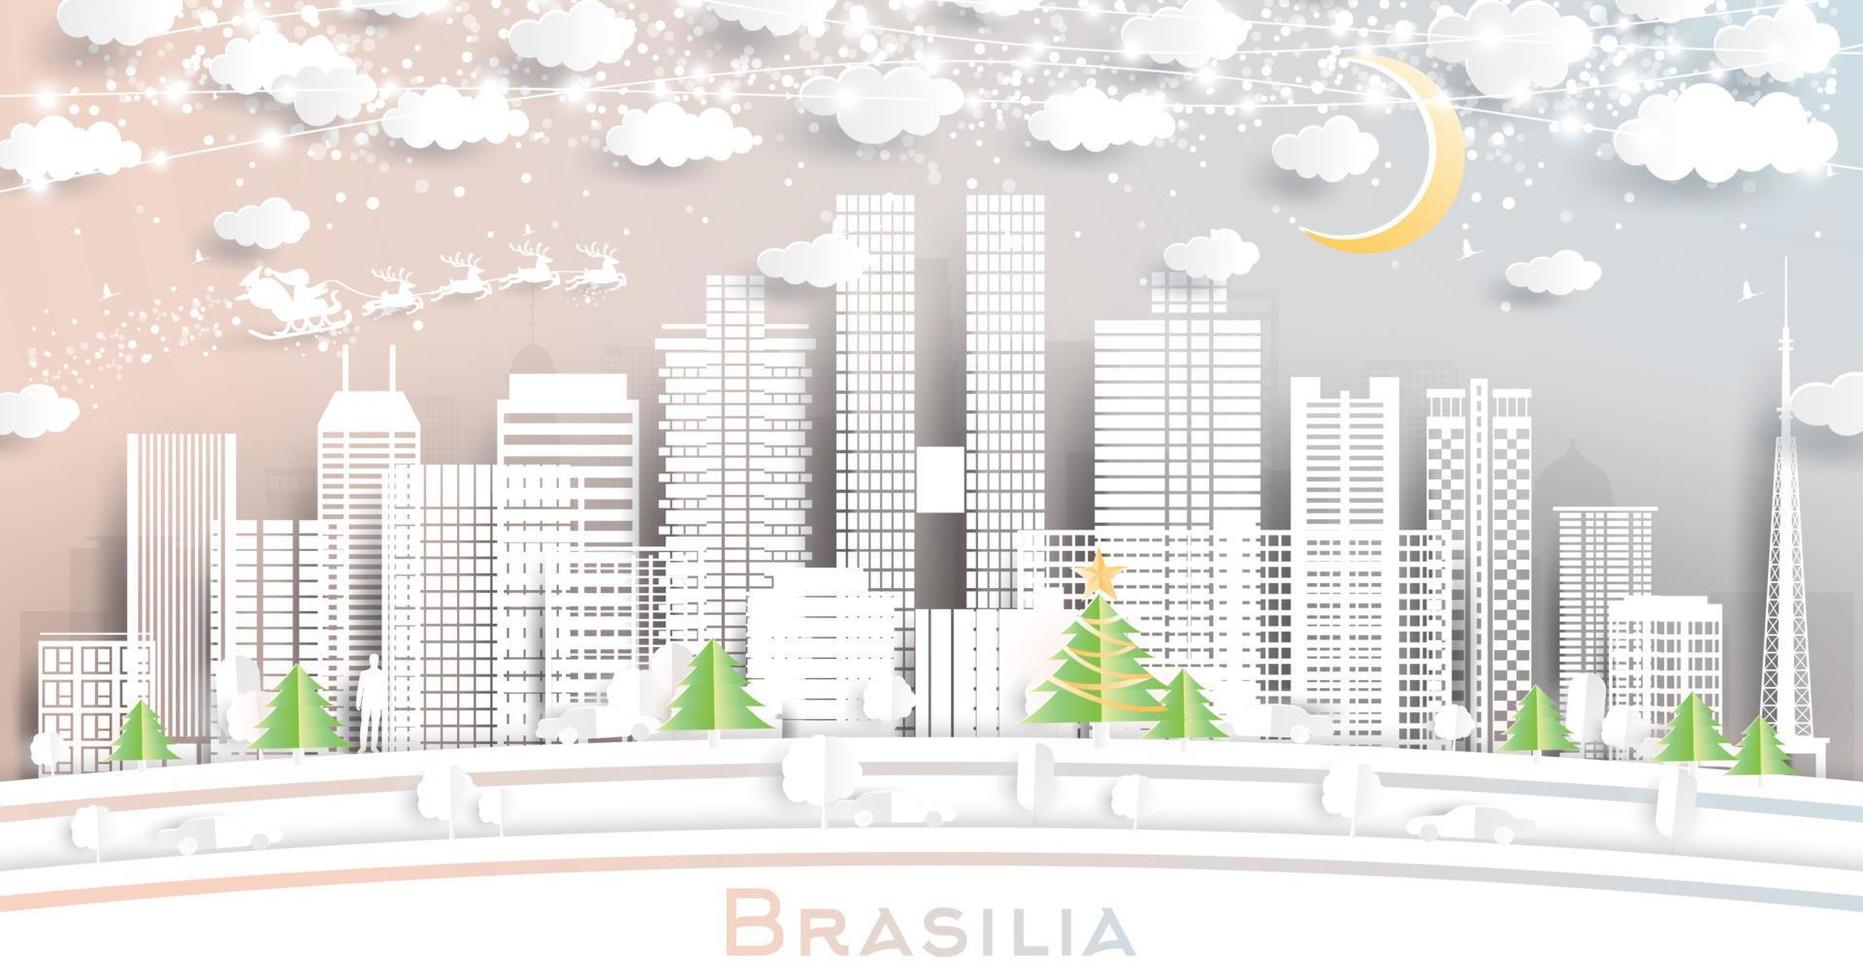 brasilia Brasilien stad horisont i papper skära stil med snöflingor, måne och neon krans. vektor